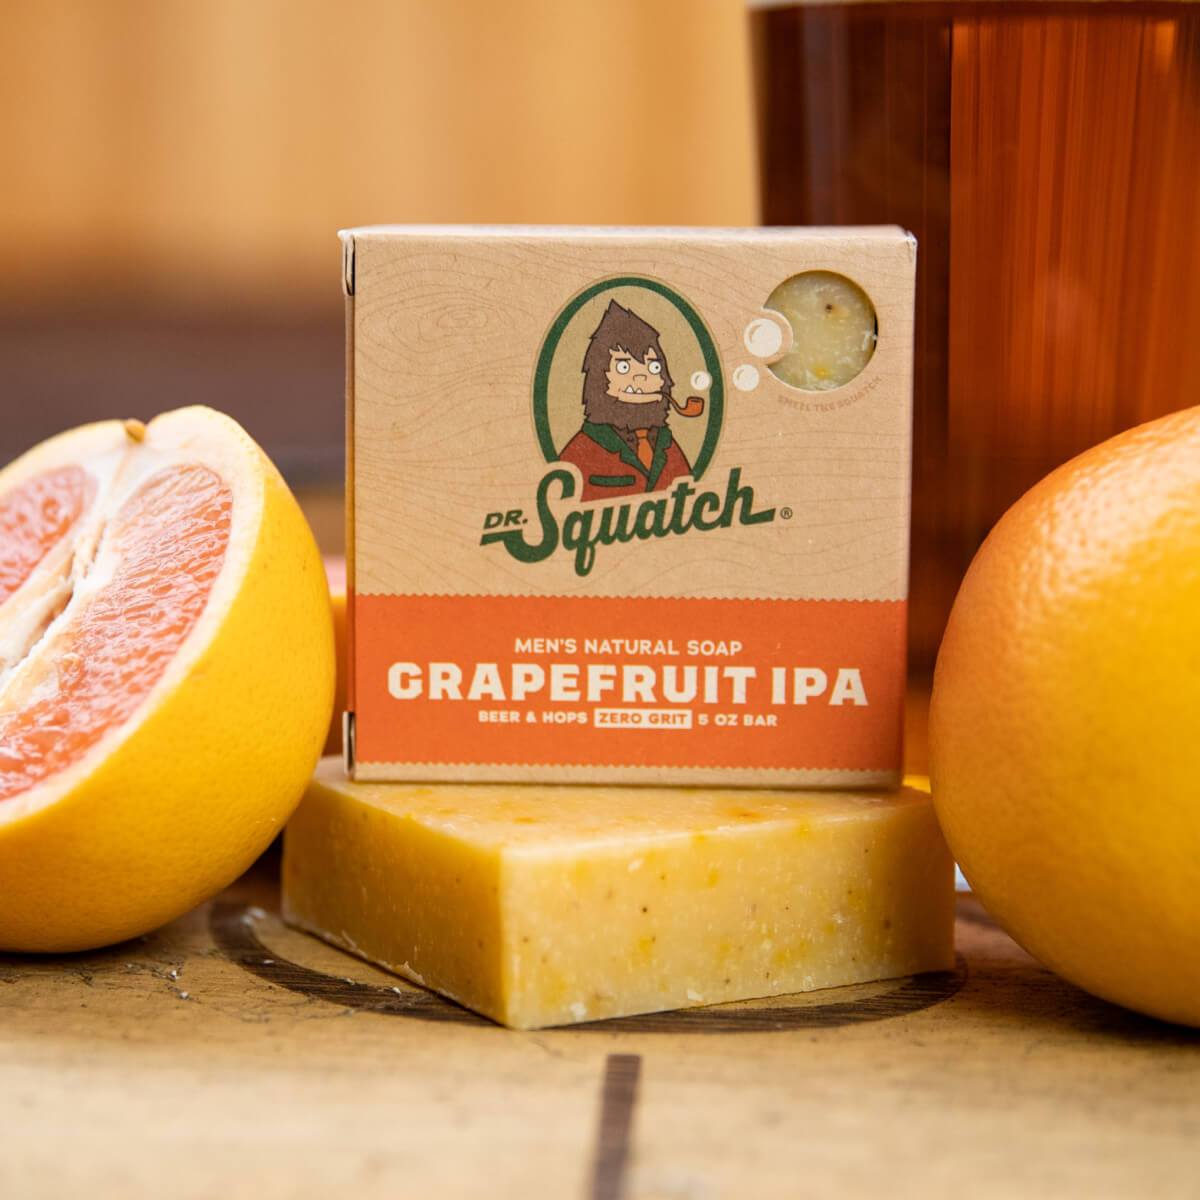 Dr. Squatch Men's Natural Soap Grapefruit IPA 5oz Bar